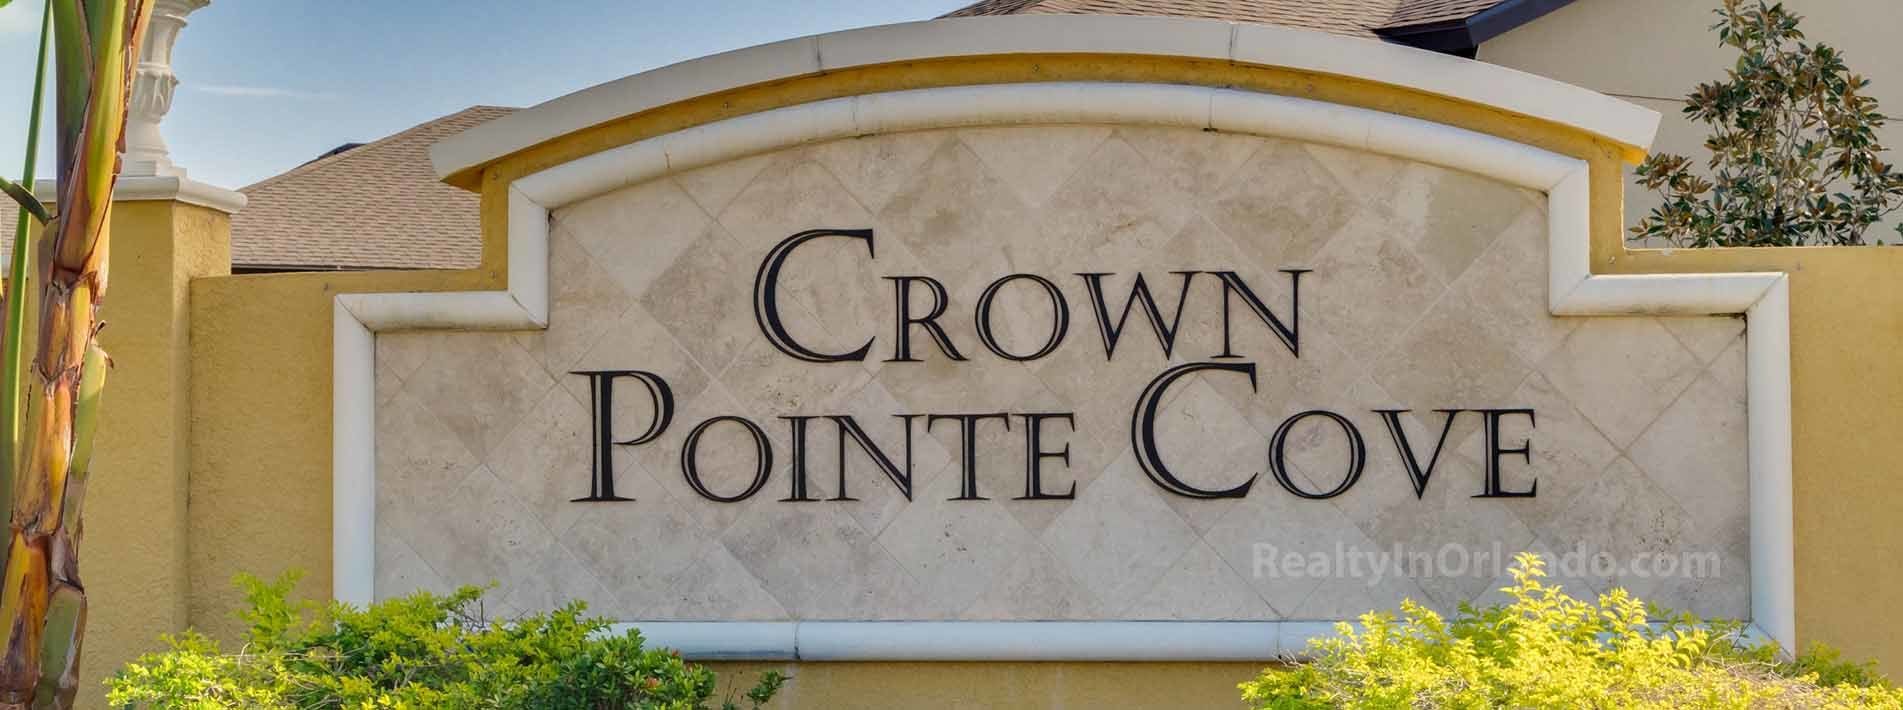 Crown Pointe Cove Real Estate